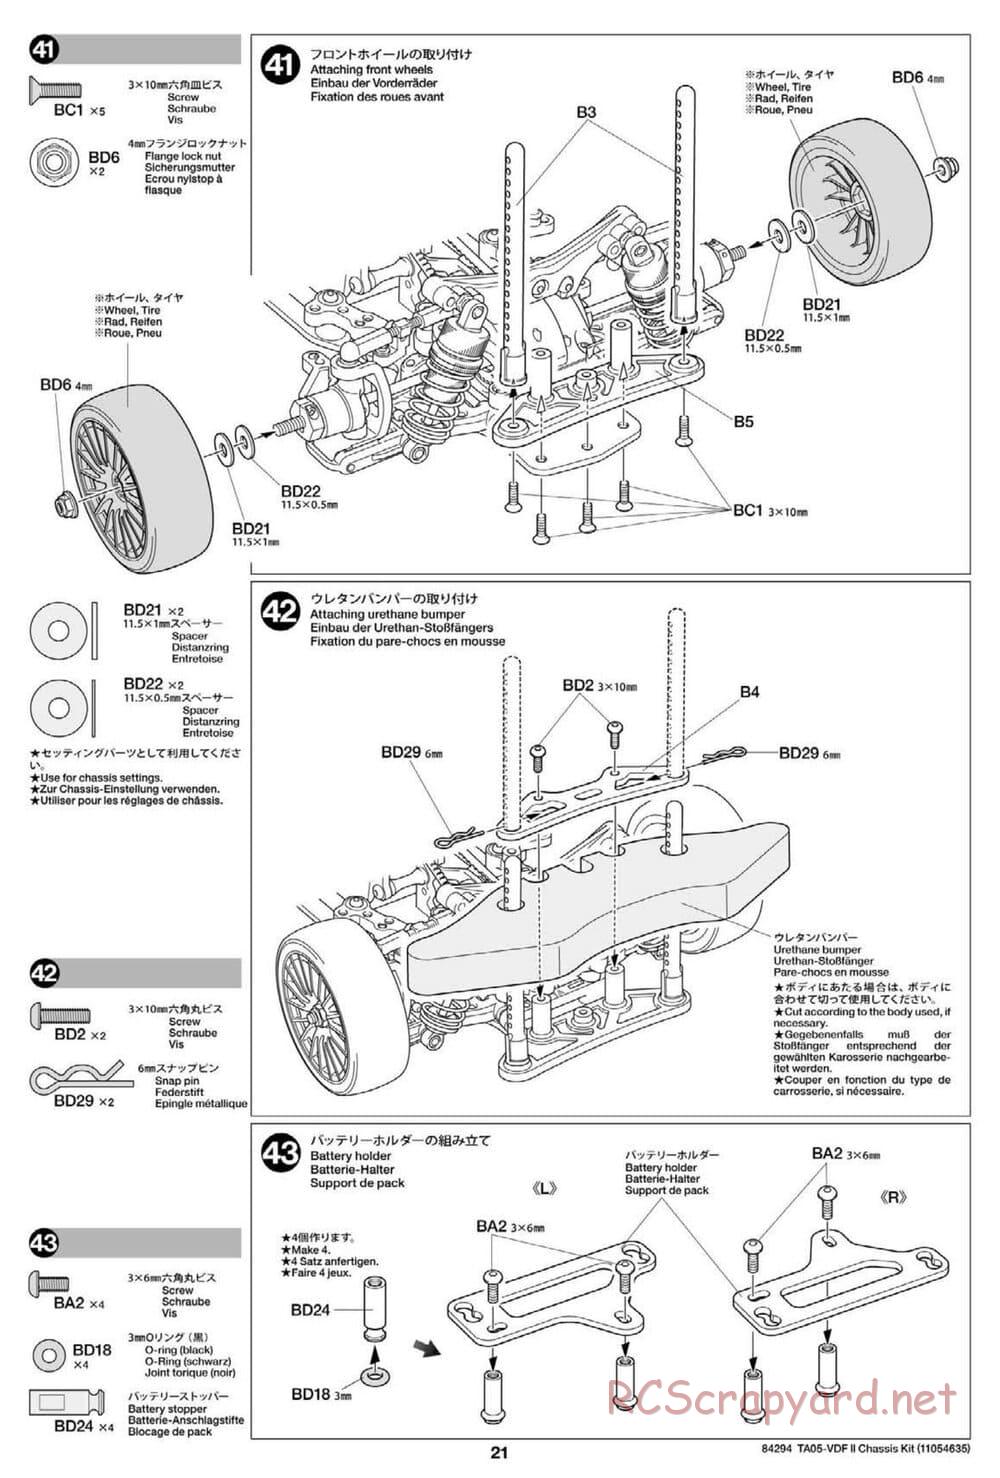 Tamiya - TA05-VDF II Drift Chassis - Manual - Page 21